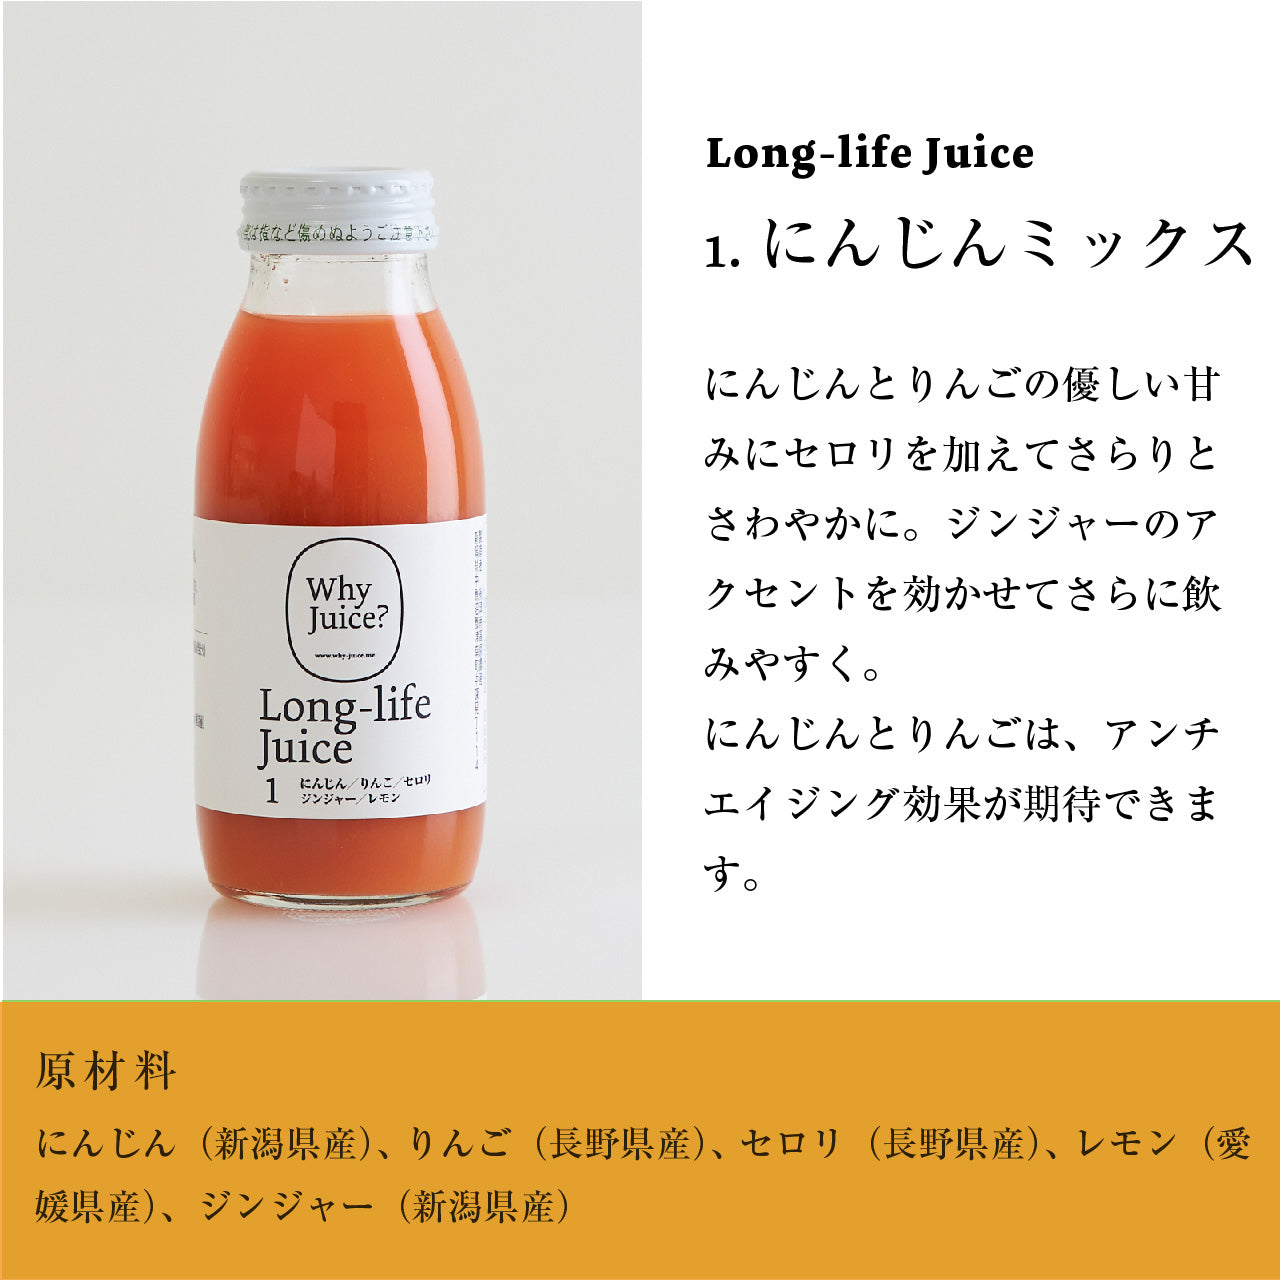 Fruits SODAとLong-life Juice の6本ギフトボックス